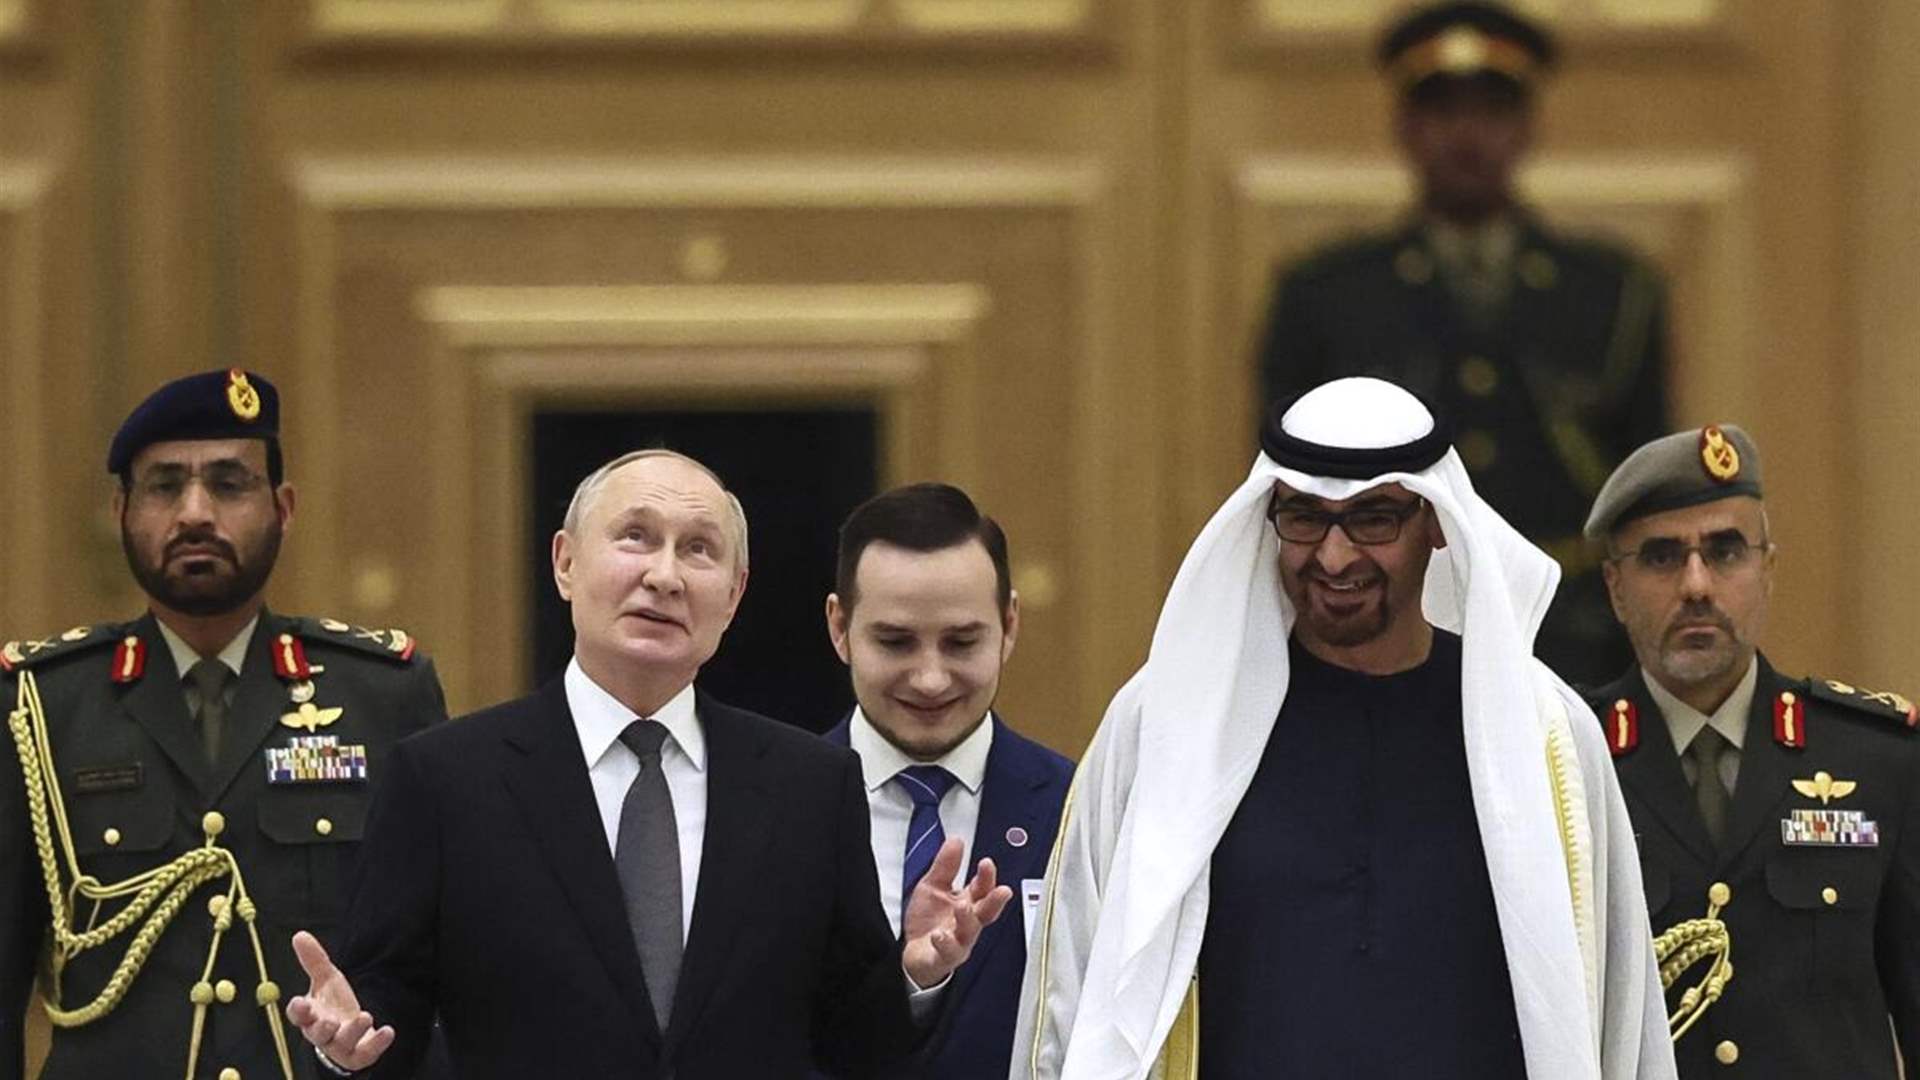 Emirati official: Putin exchanged views on regional, international developments during visit 